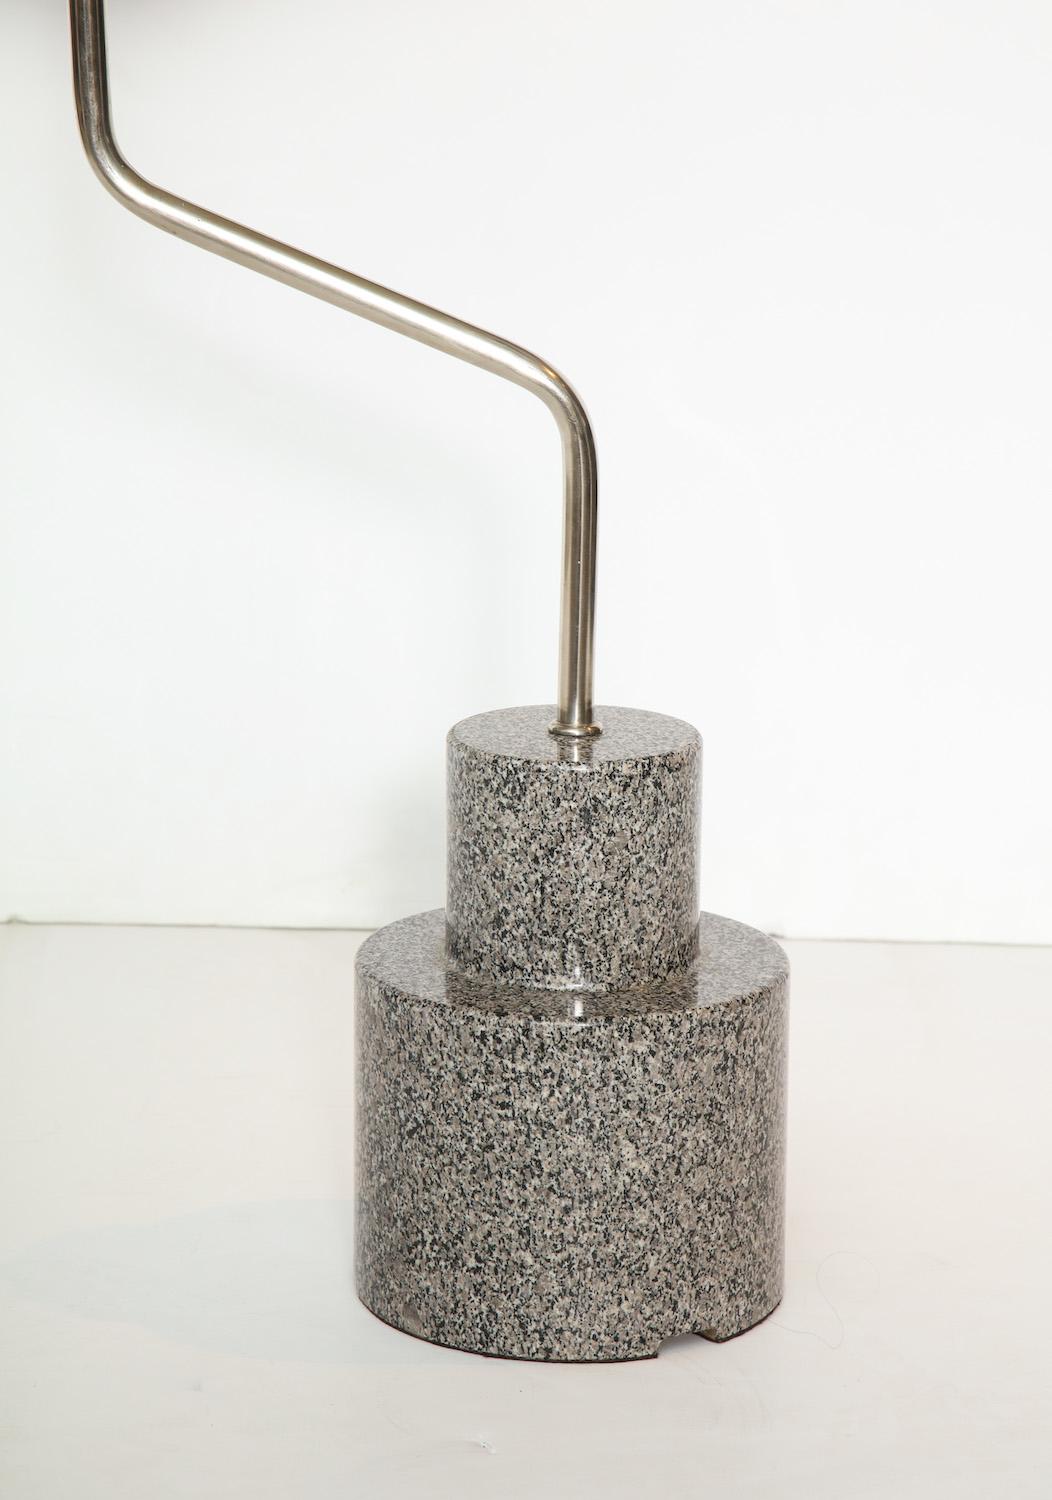 Enameled Rare “Mikado” Table Lamp by Luigi Caccia Dominioni